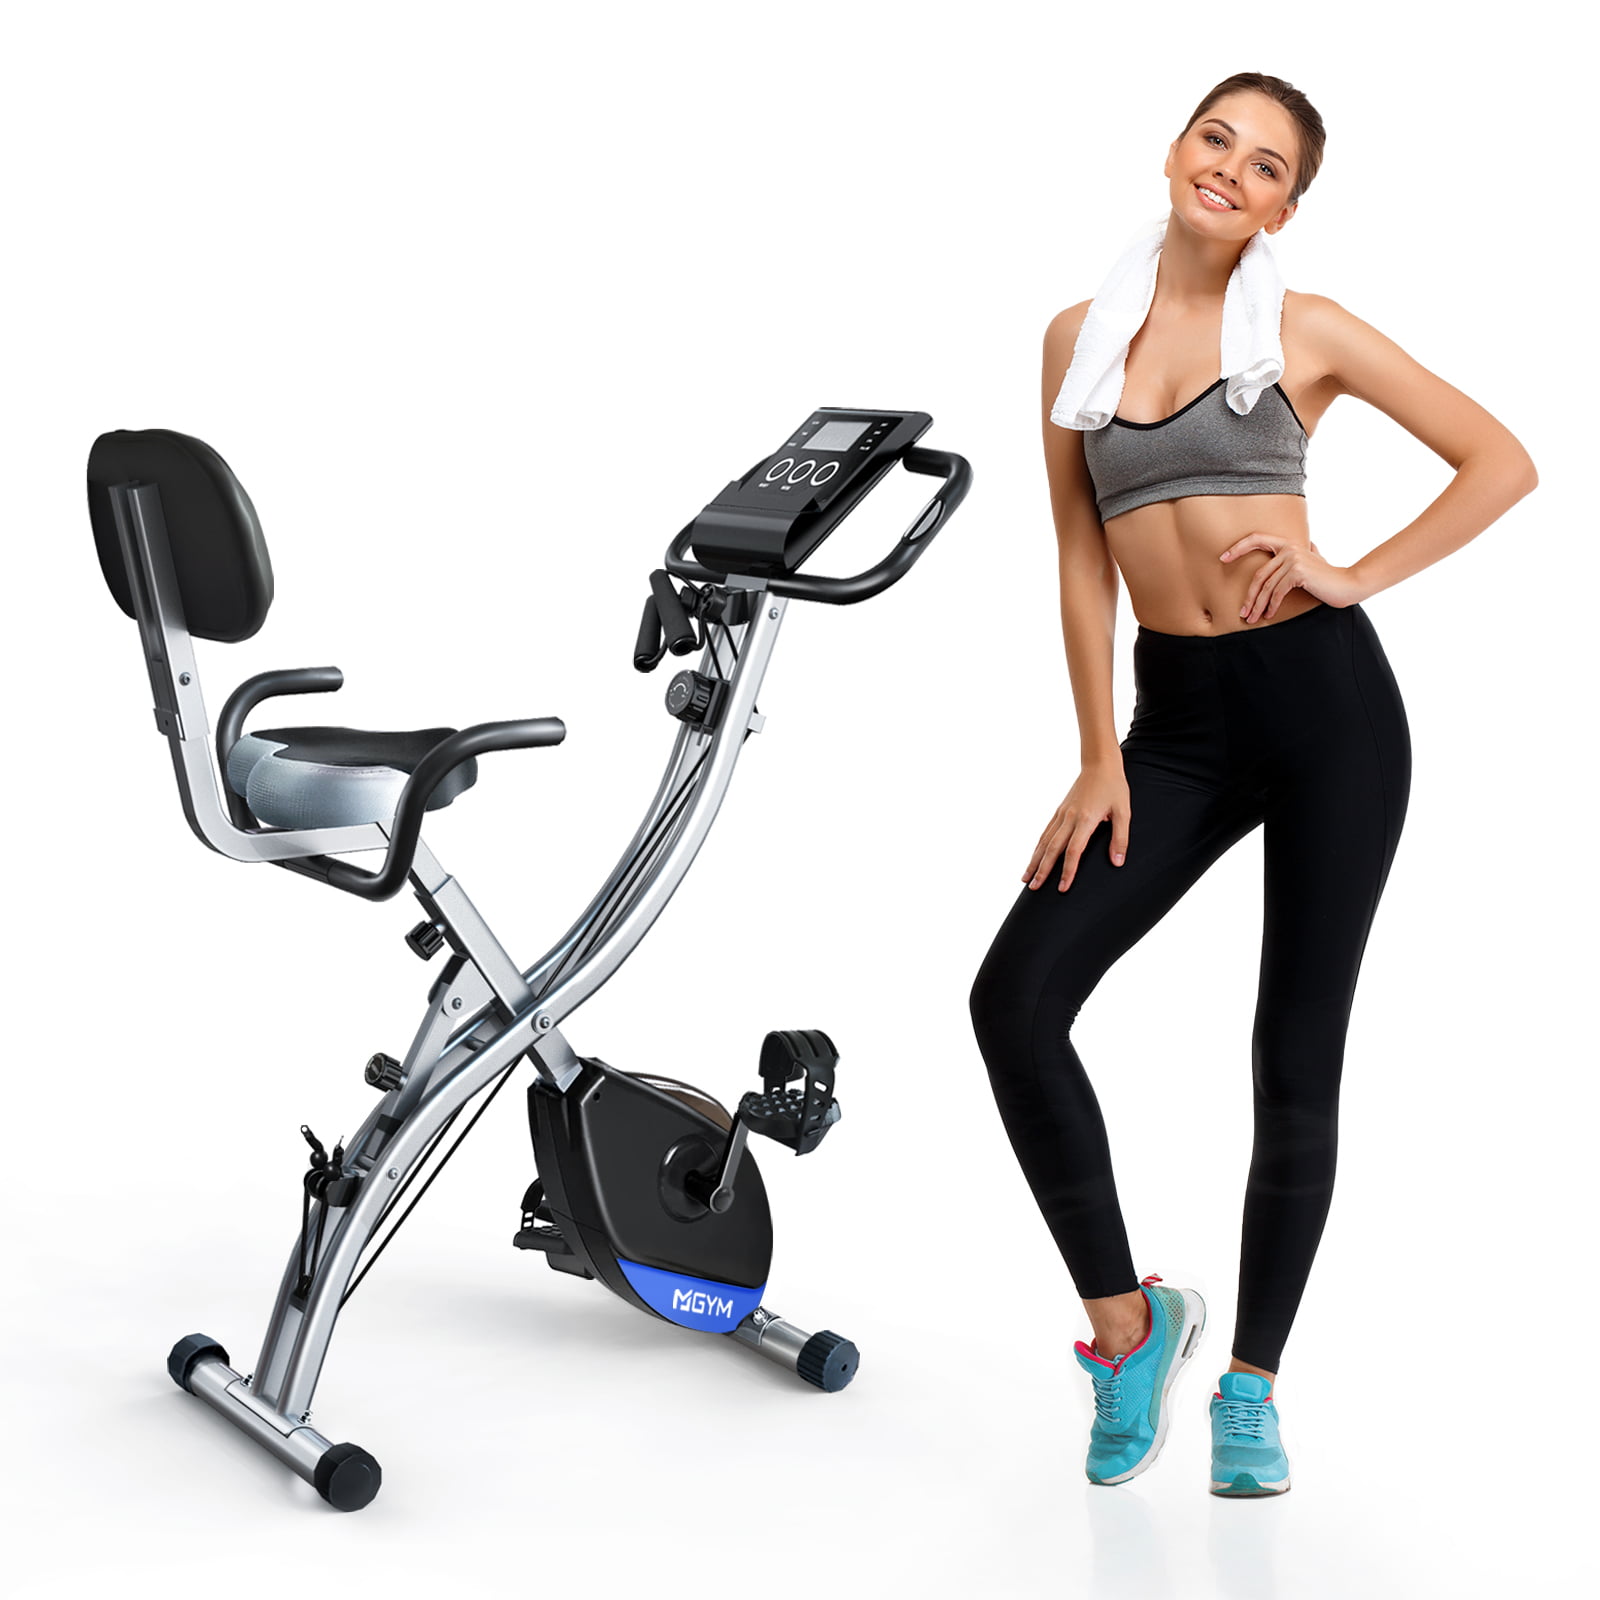 Folding Exercise Bike Home Indoor Cardio Fitness Upright Stationary Equipment 